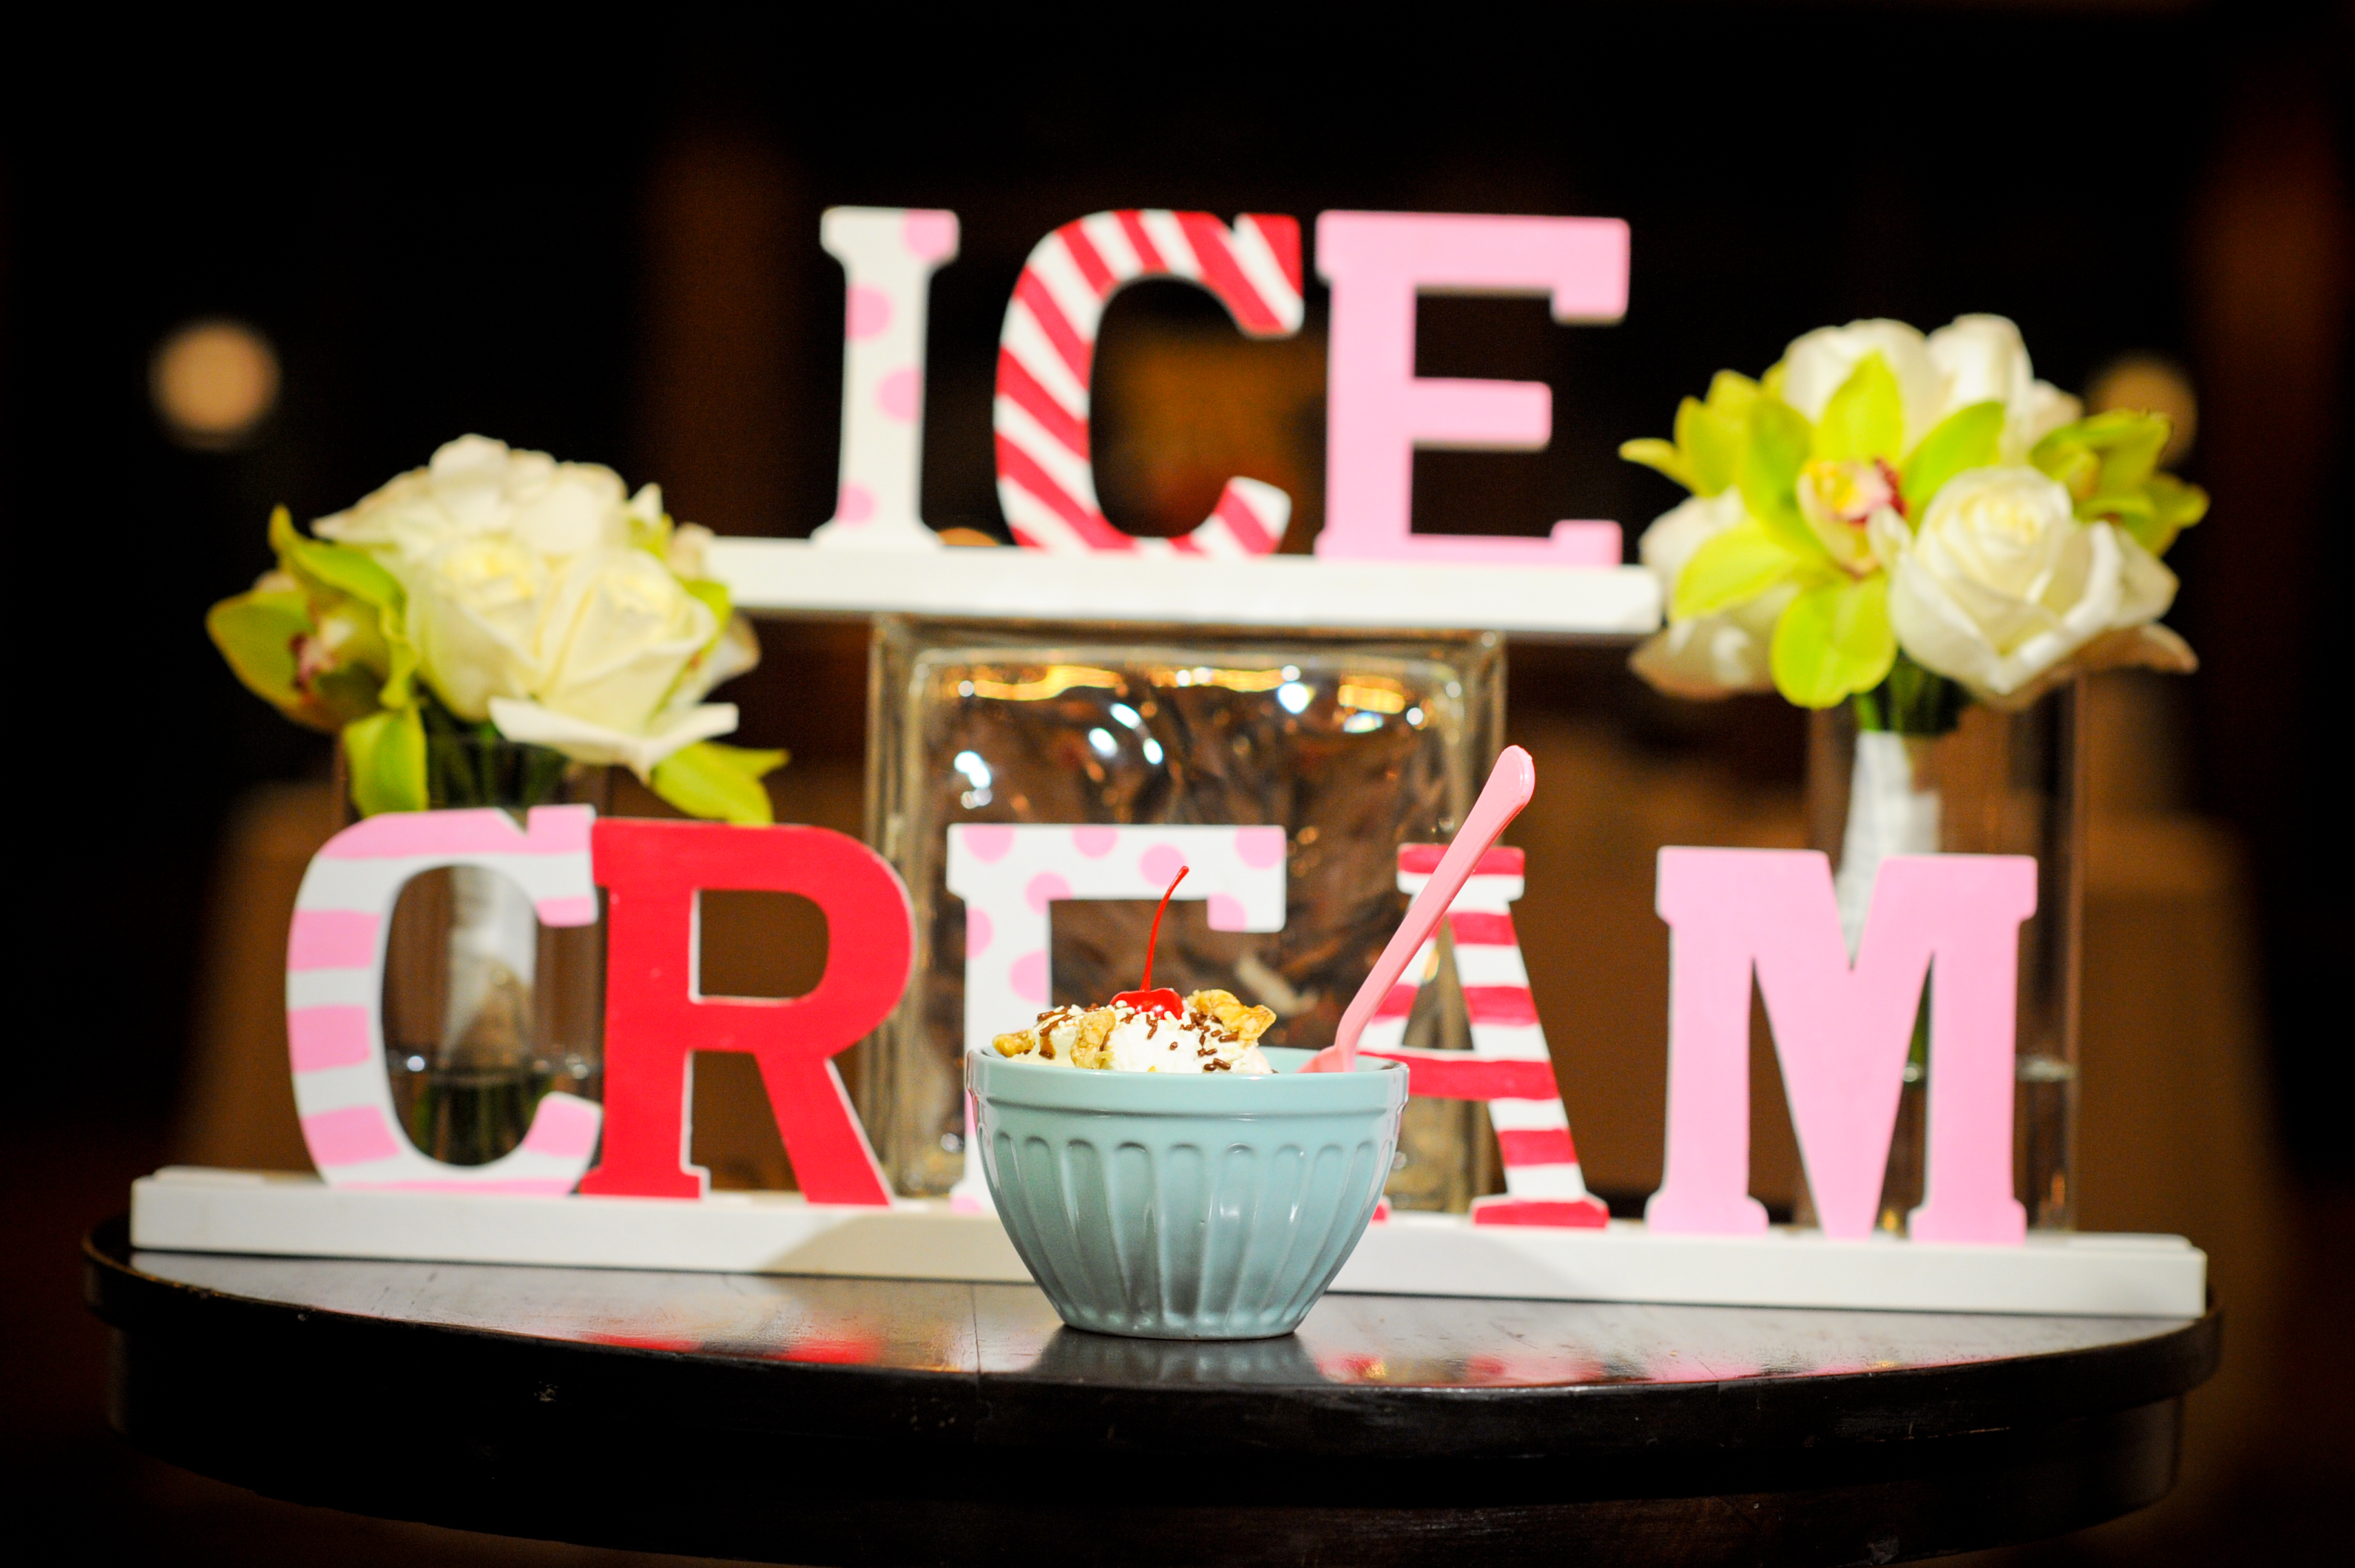 https://willowdaleestate.com/galleries/celebrations/ice-cream-sundae-bar-station-toppings-wedding-event-celebration-dessert-diy-signage/